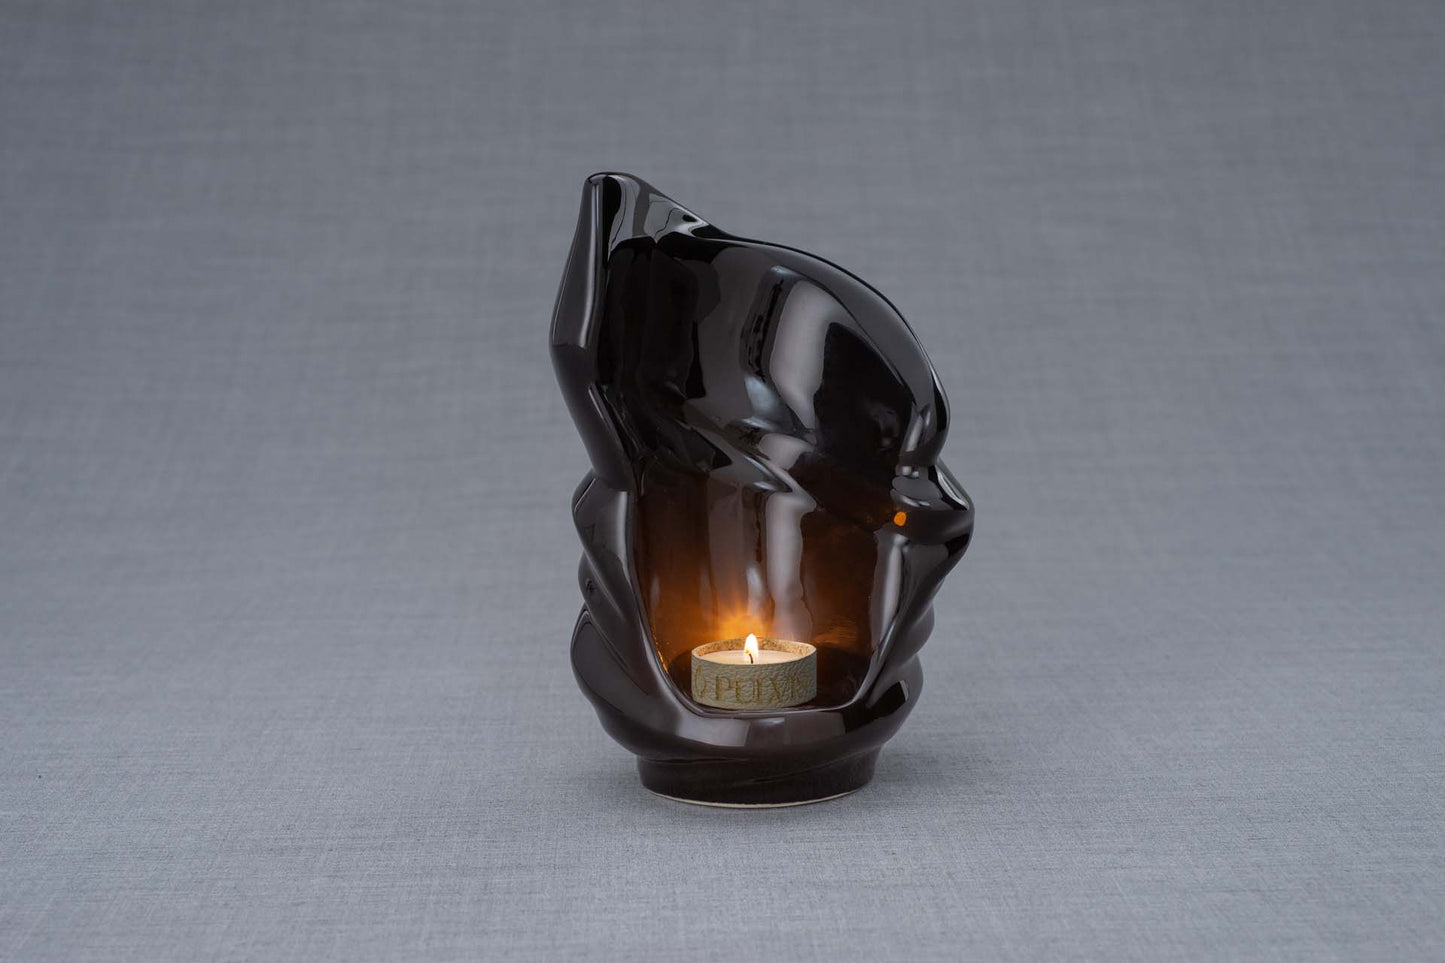 Pulvis Art Urns Keepsake Urn Handmade Cremation Keepsake Urn "Light" - Small | Lamp Black | Ceramic